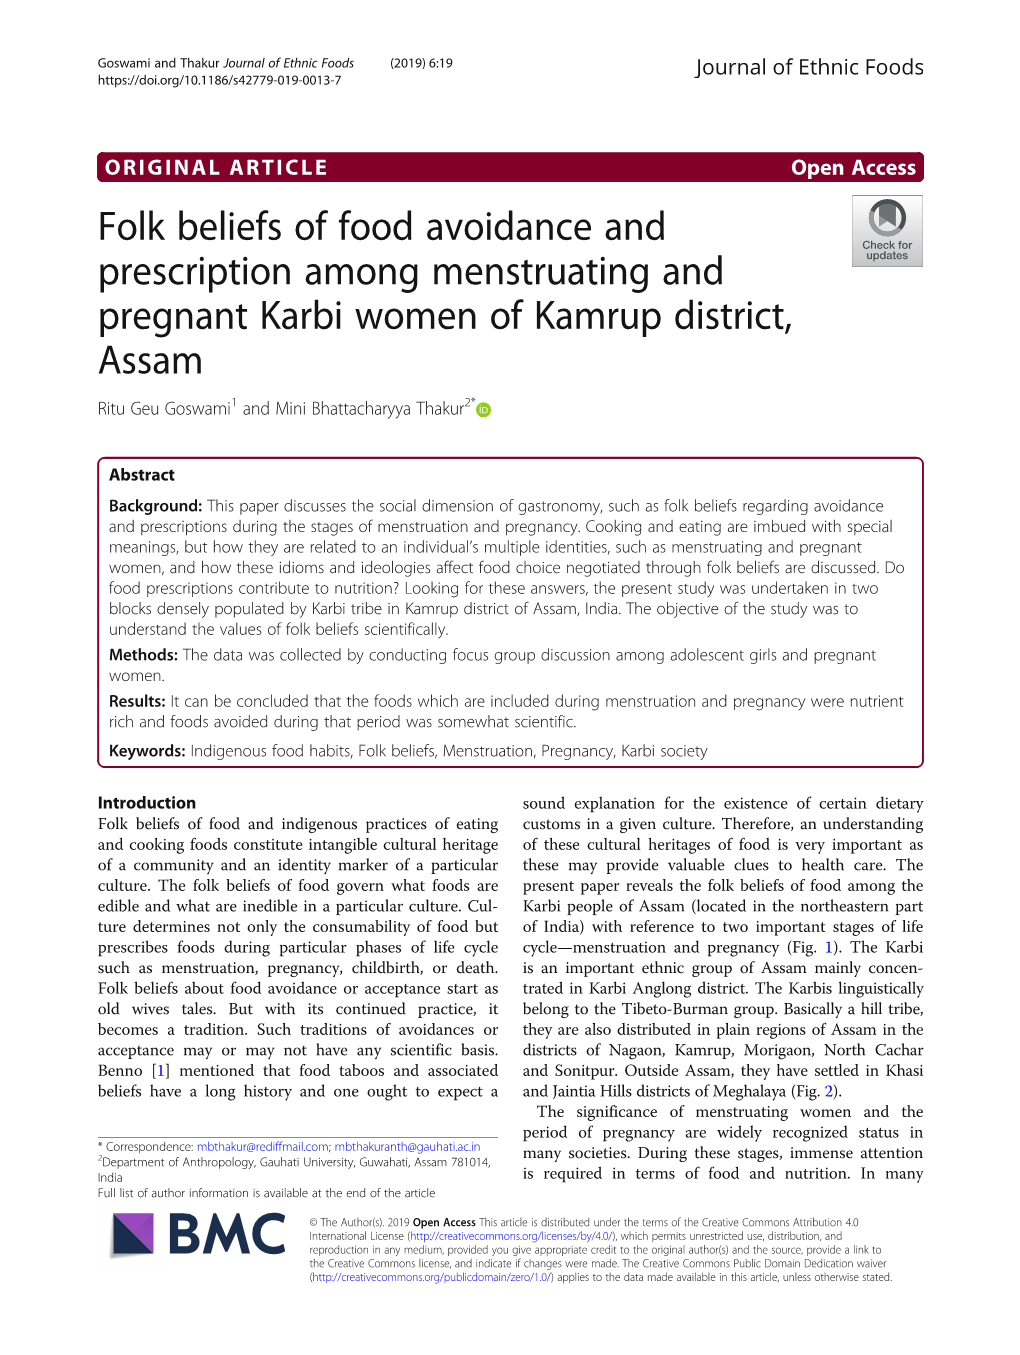 Folk Beliefs of Food Avoidance and Prescription Among Menstruating and Pregnant Karbi Women of Kamrup District, Assam